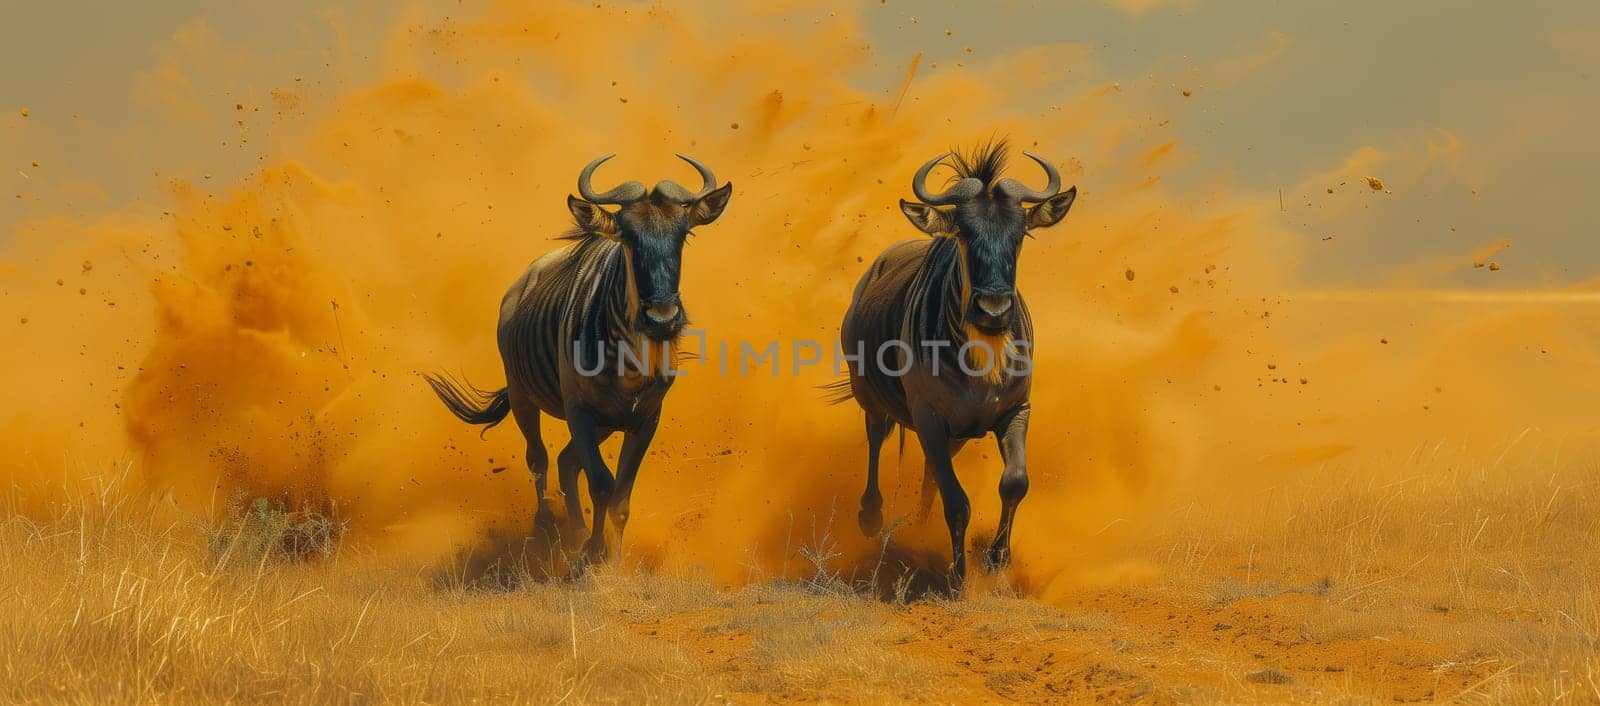 Two wildebeest sprinting across a grassy savannah landscape by richwolf